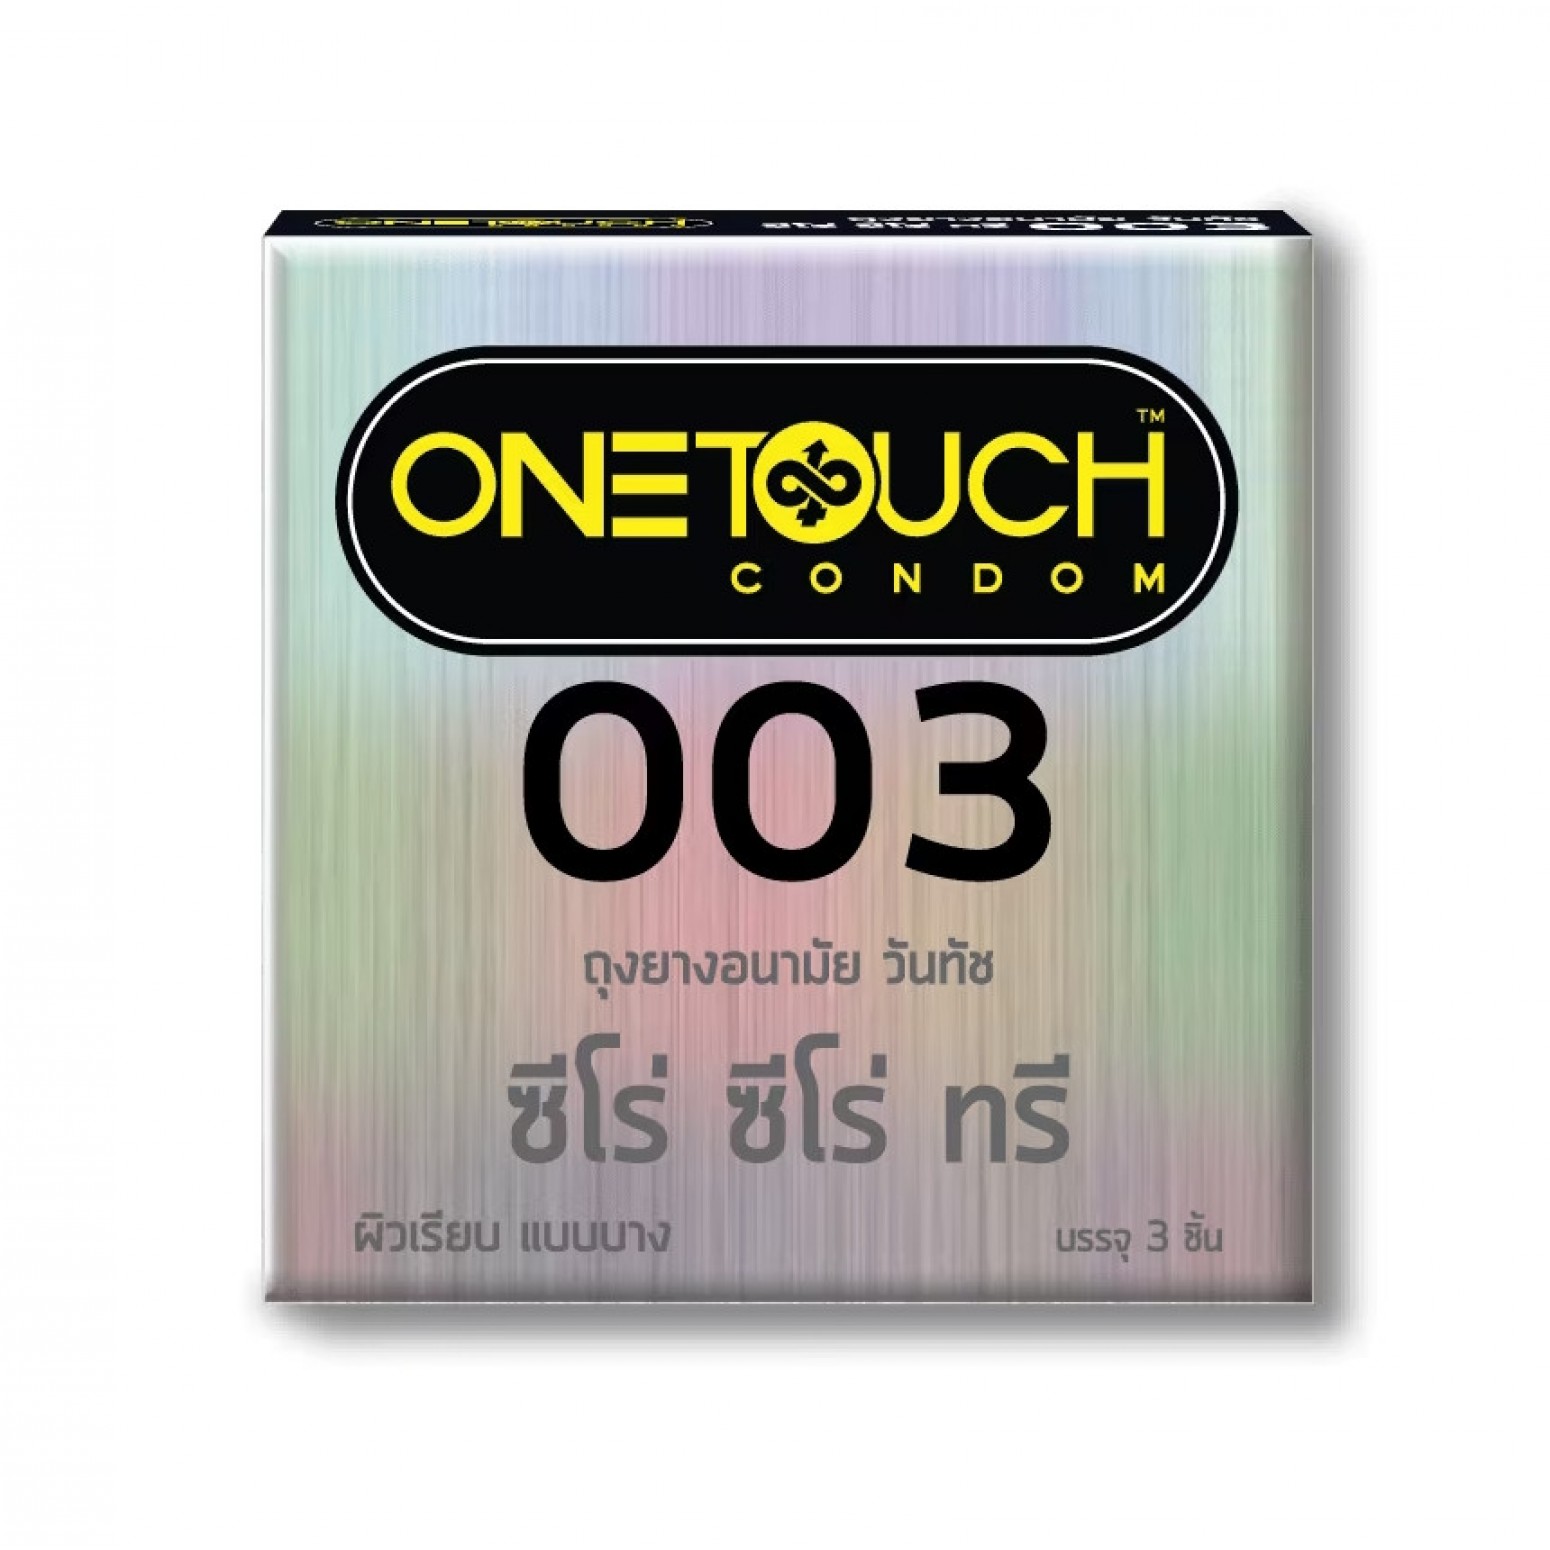 One touch Zero Zero Three 003